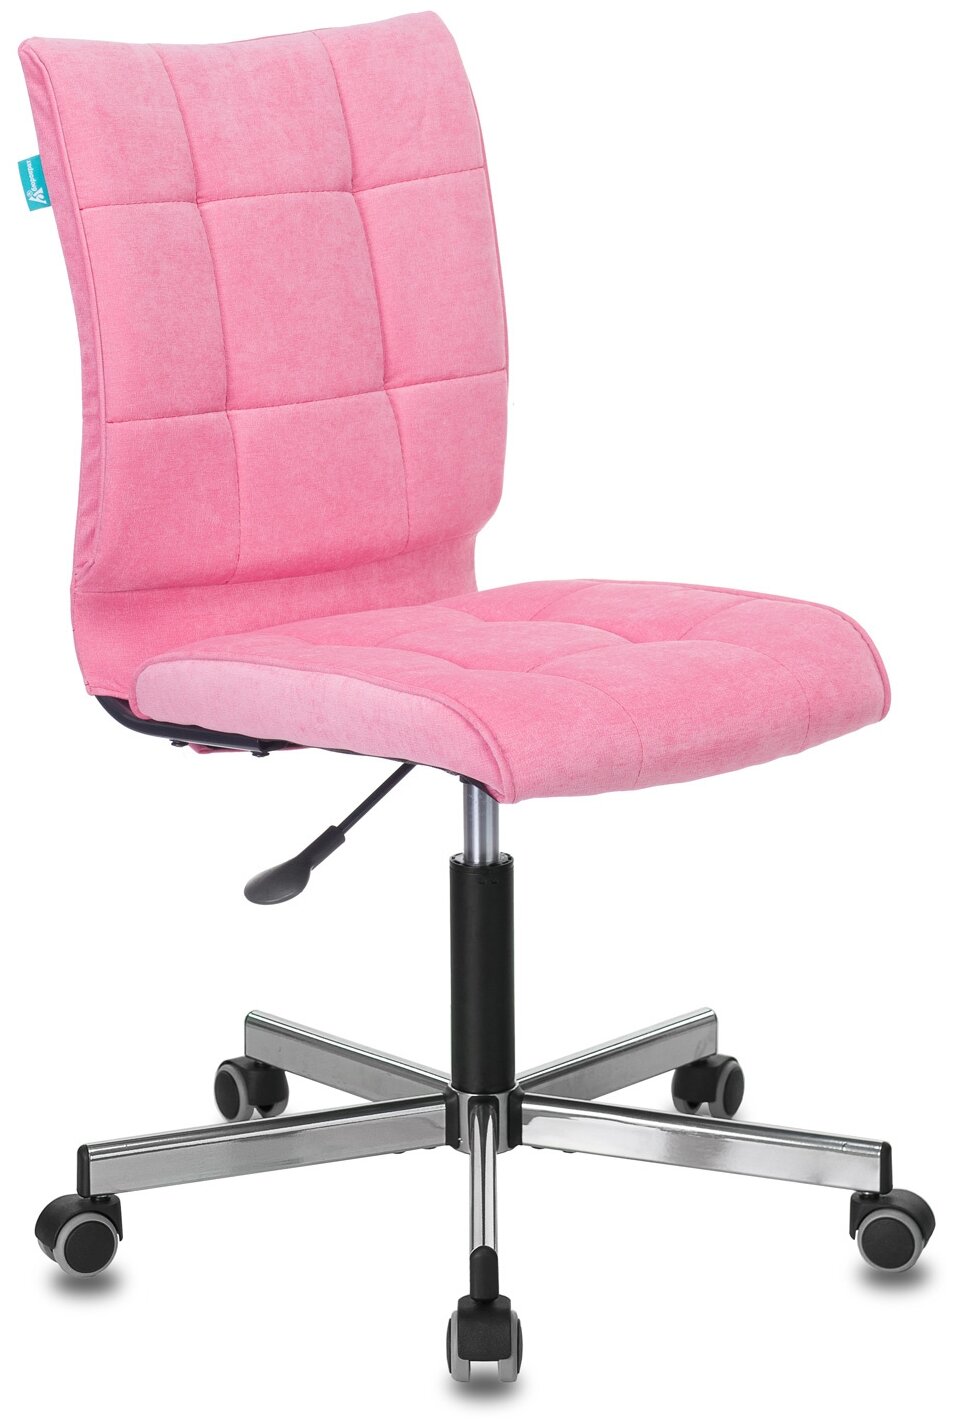 Кресло Бюрократ CH-330M, на колесиках, ткань, розовый [ch-330m/velv36]